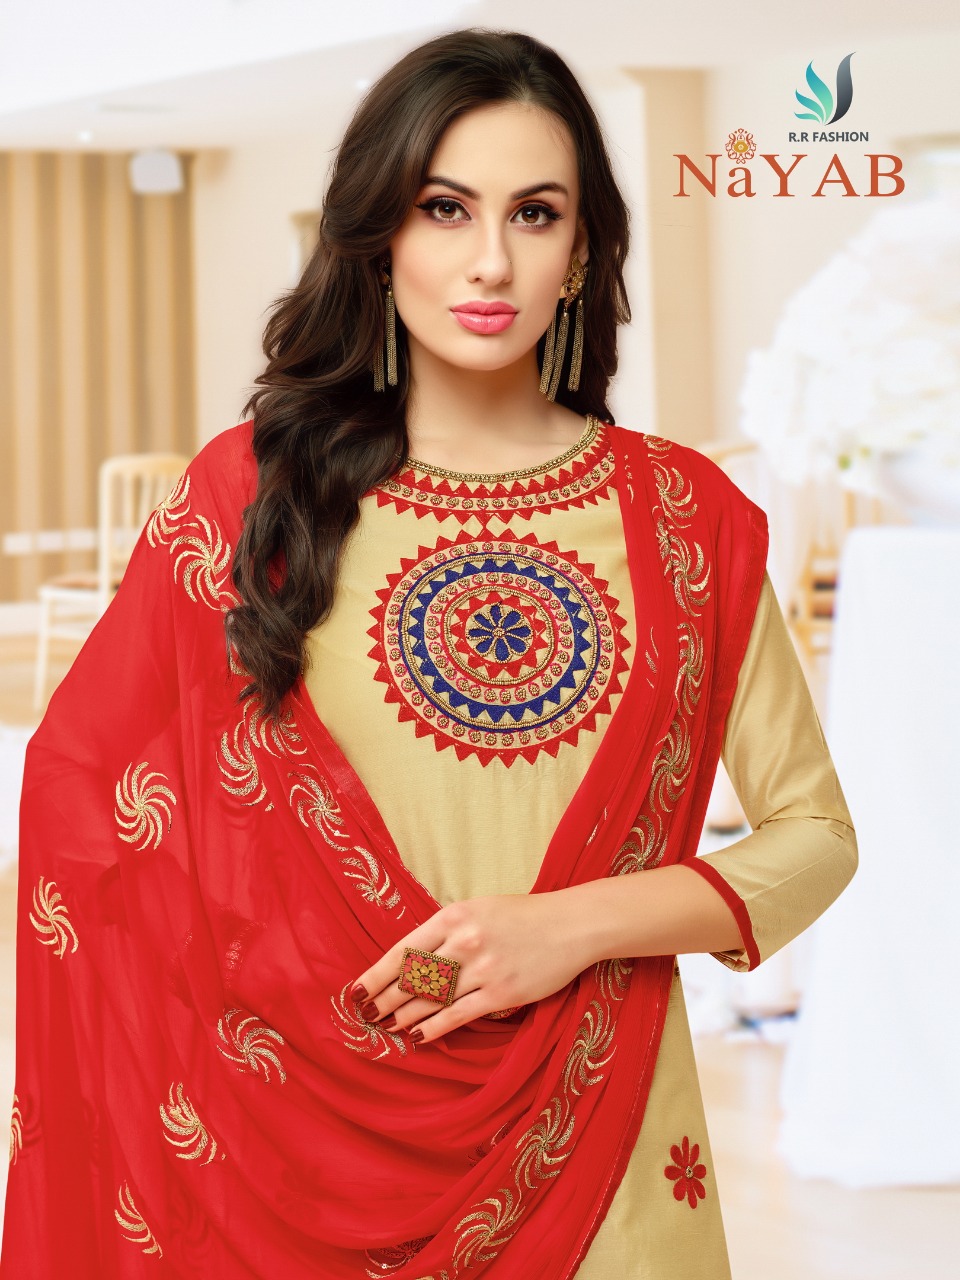 Rr Fashion Nayab Modal Cotton With Embroidery Handwork Dress...